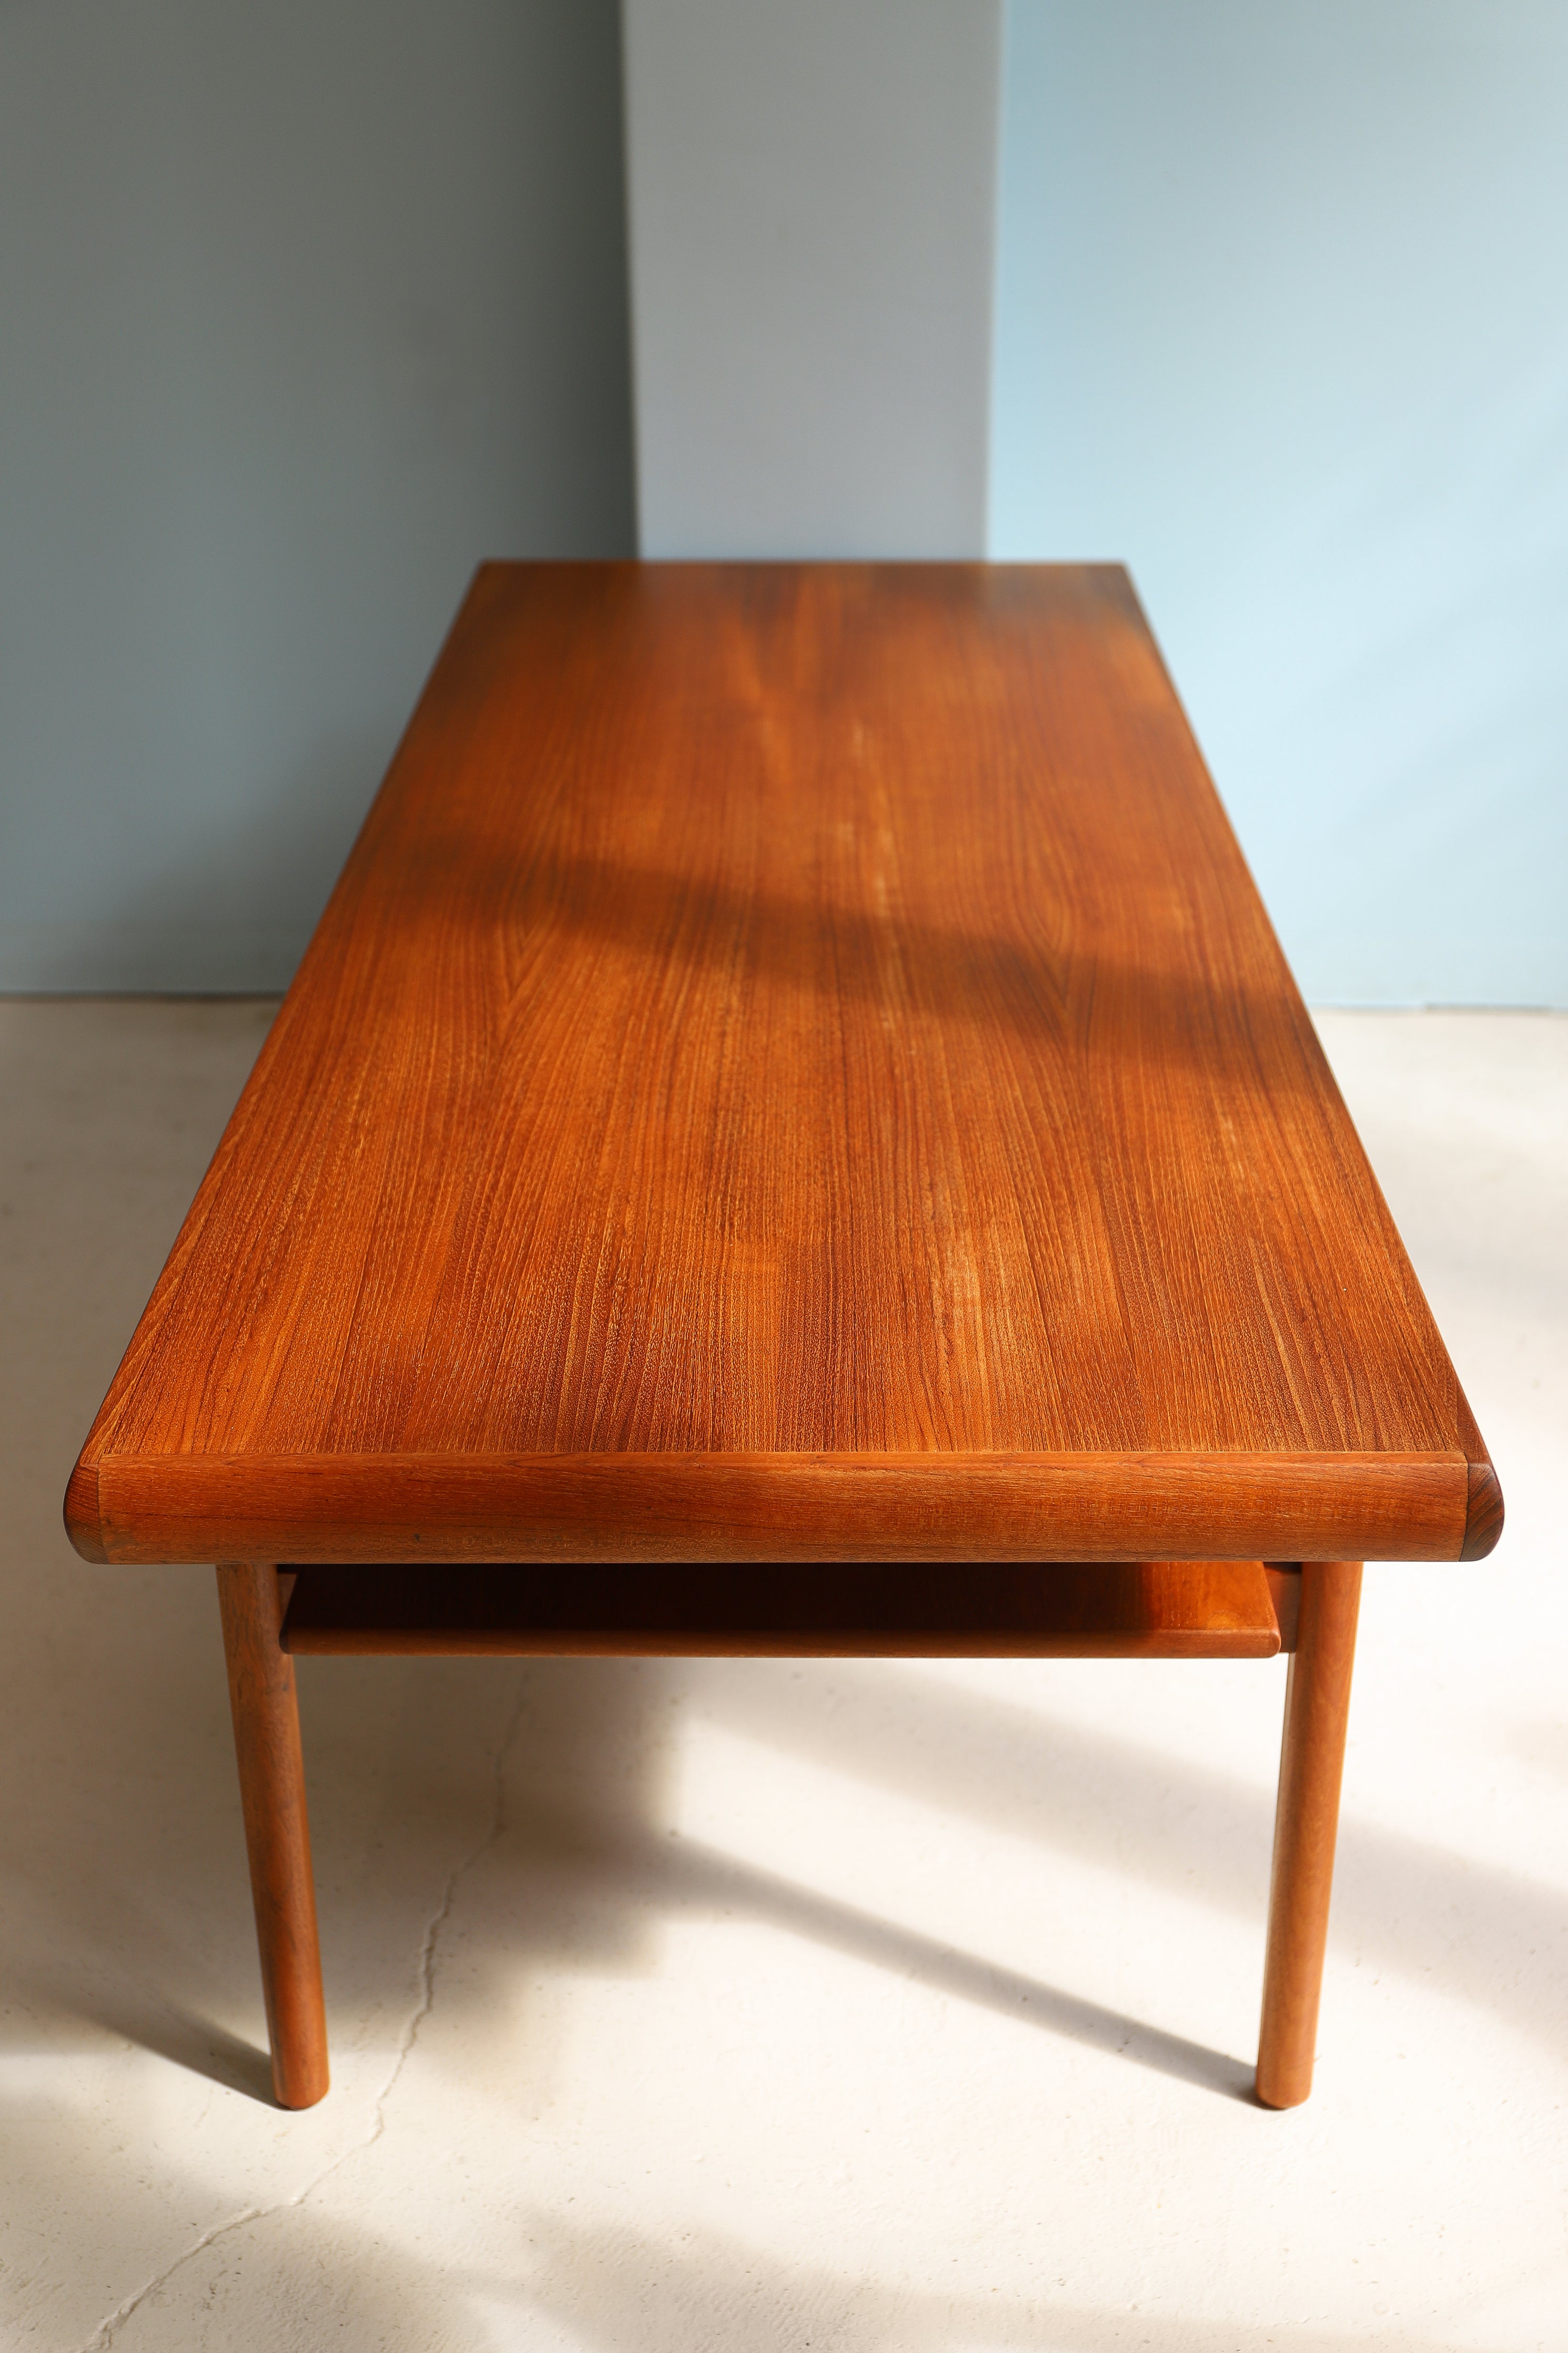 Danish Vintage Teakwood Coffee Table with Shelf/デンマークヴィンテージ コーヒーテーブル チーク材 棚板付き 北欧家具